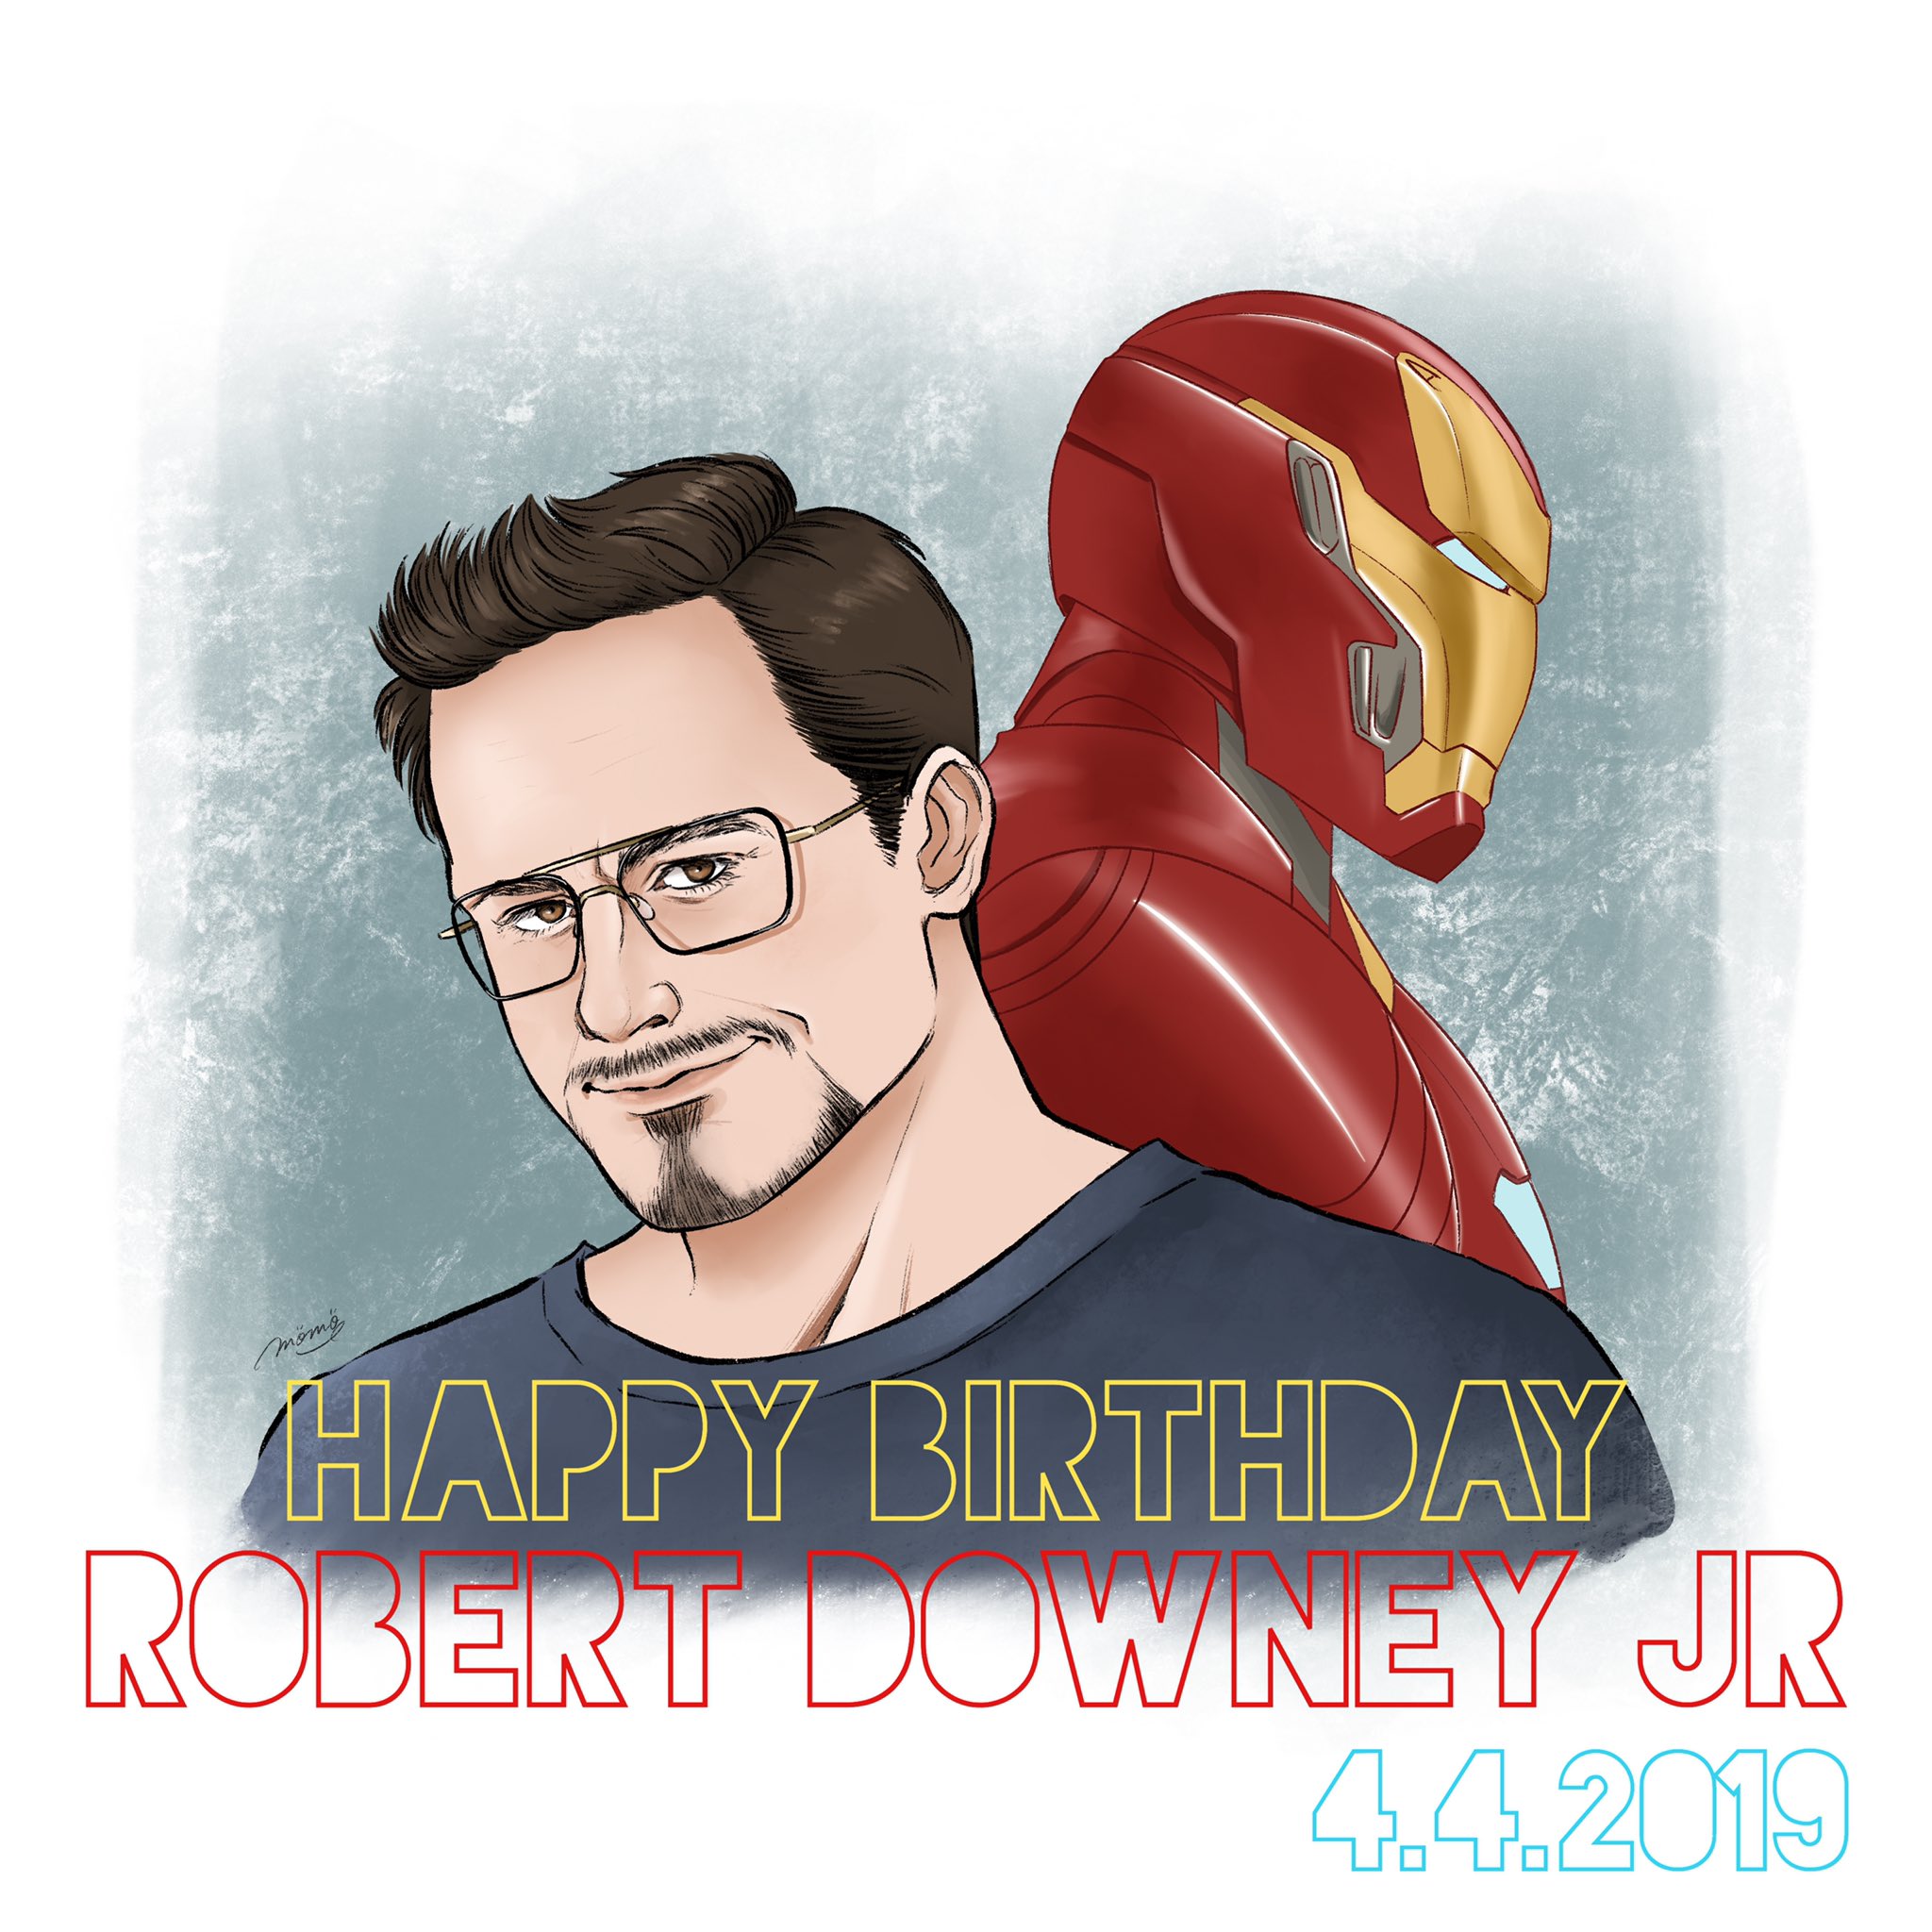 Happy Birthday Robert downey jr     